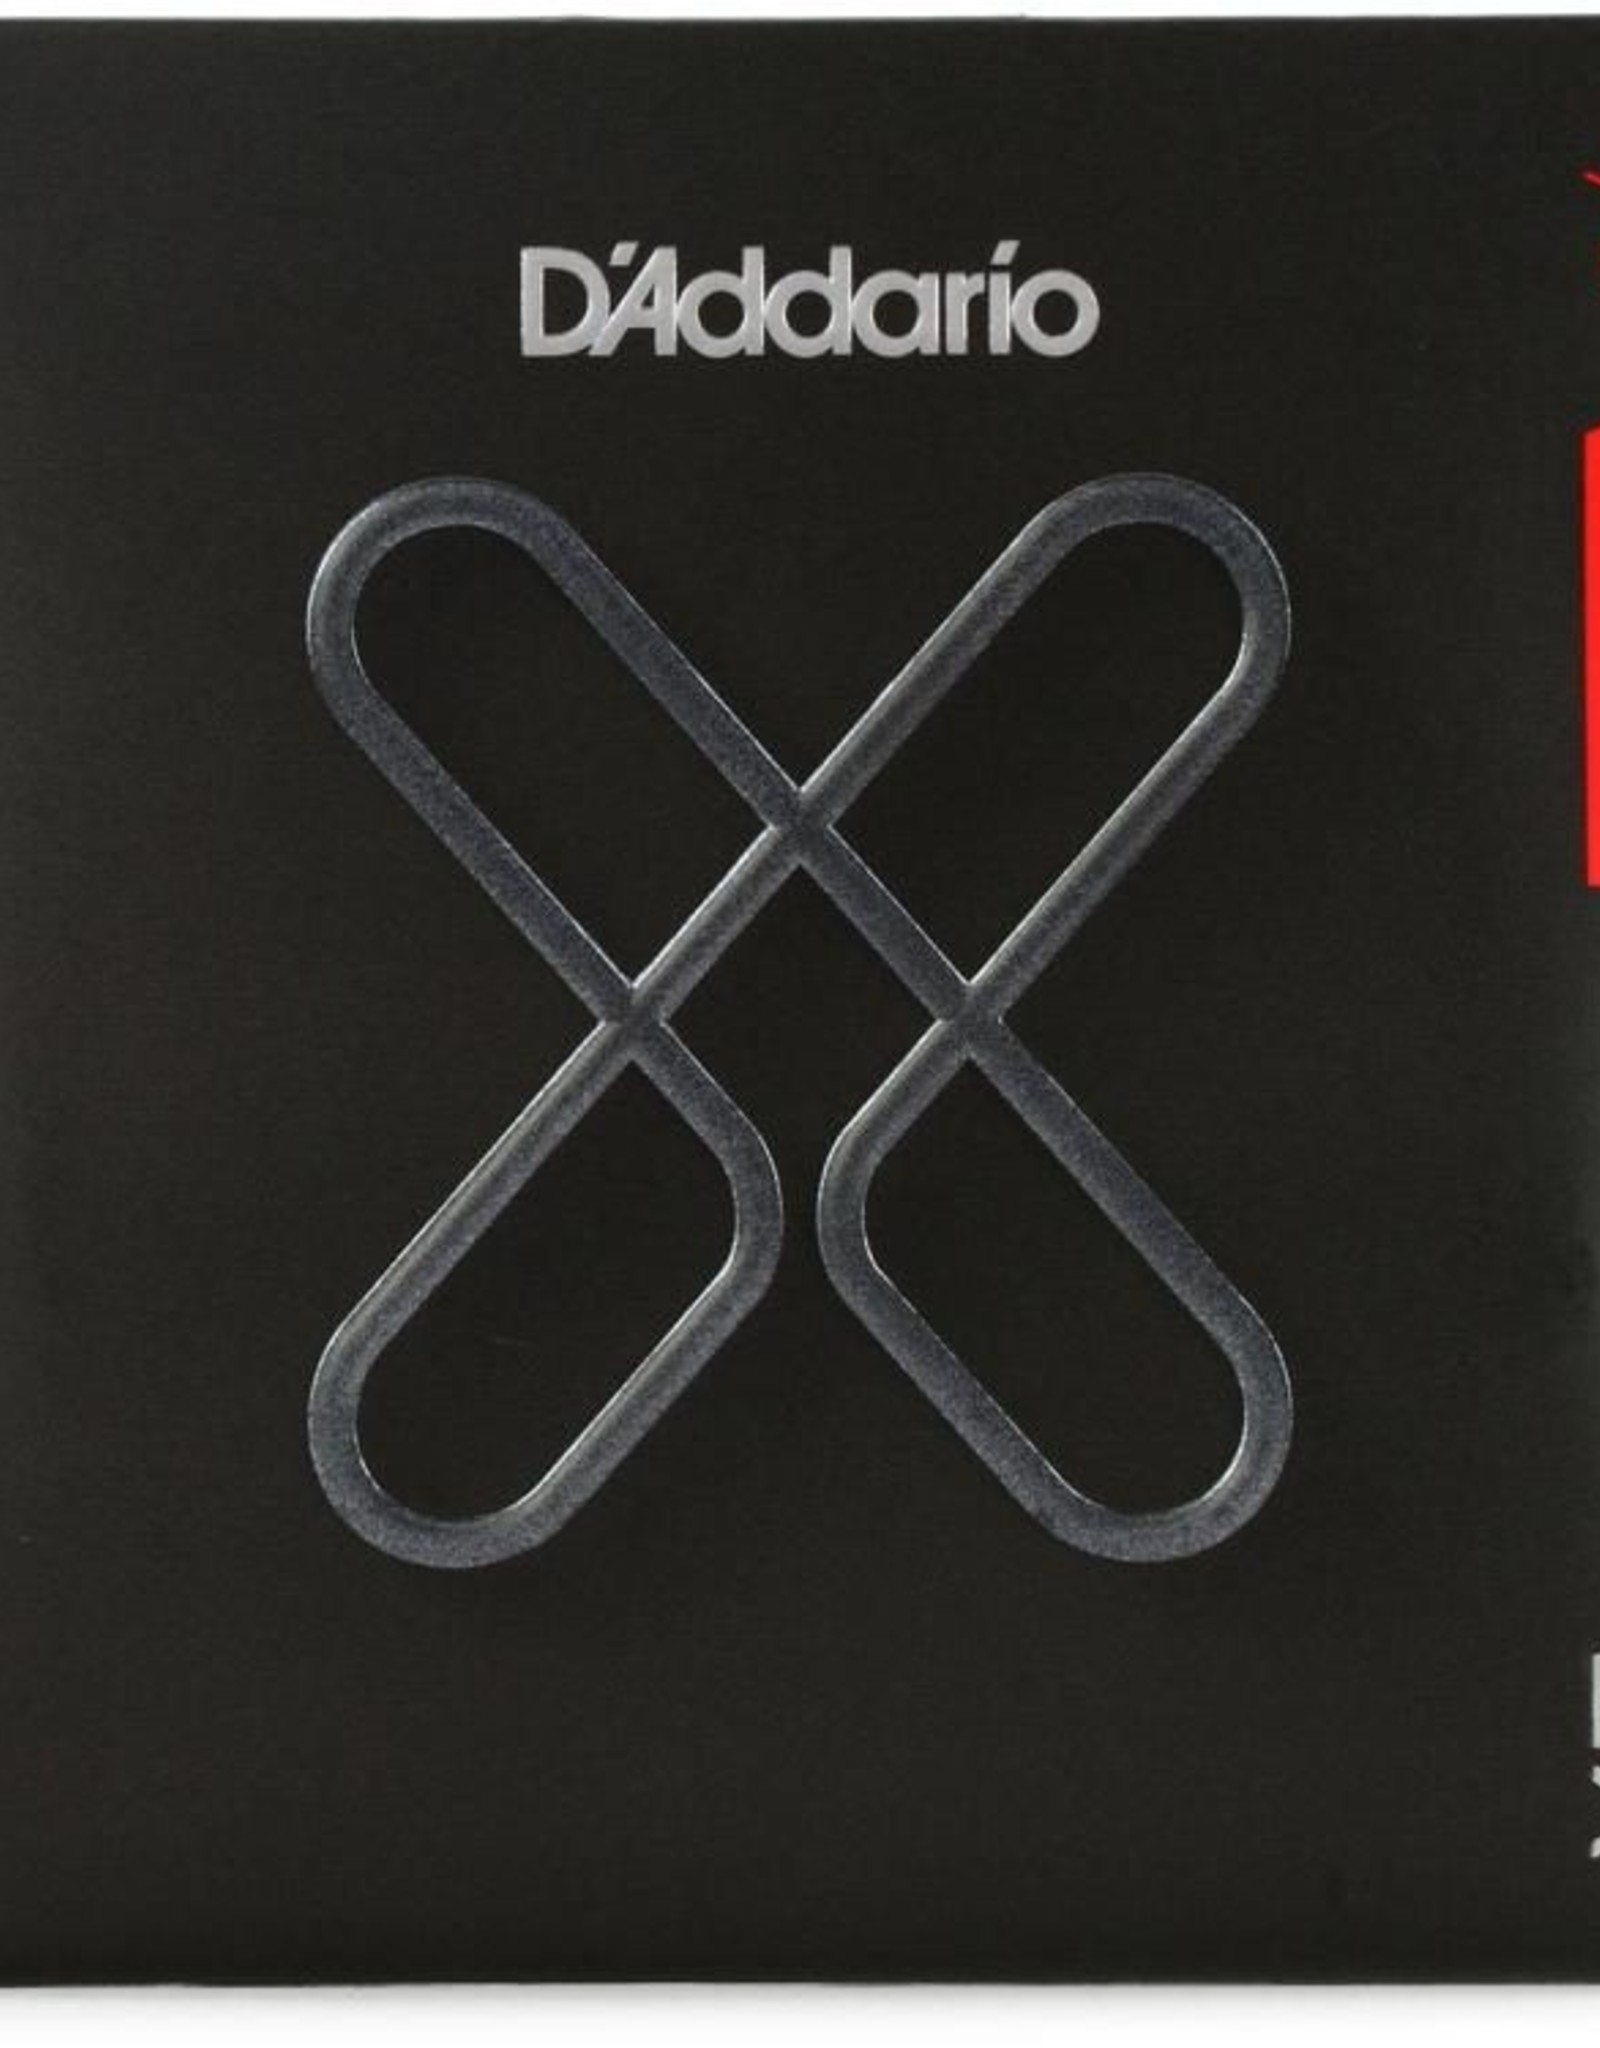 D'Addario XT Acoustic Phosphor Bronze, Medium, 13-56